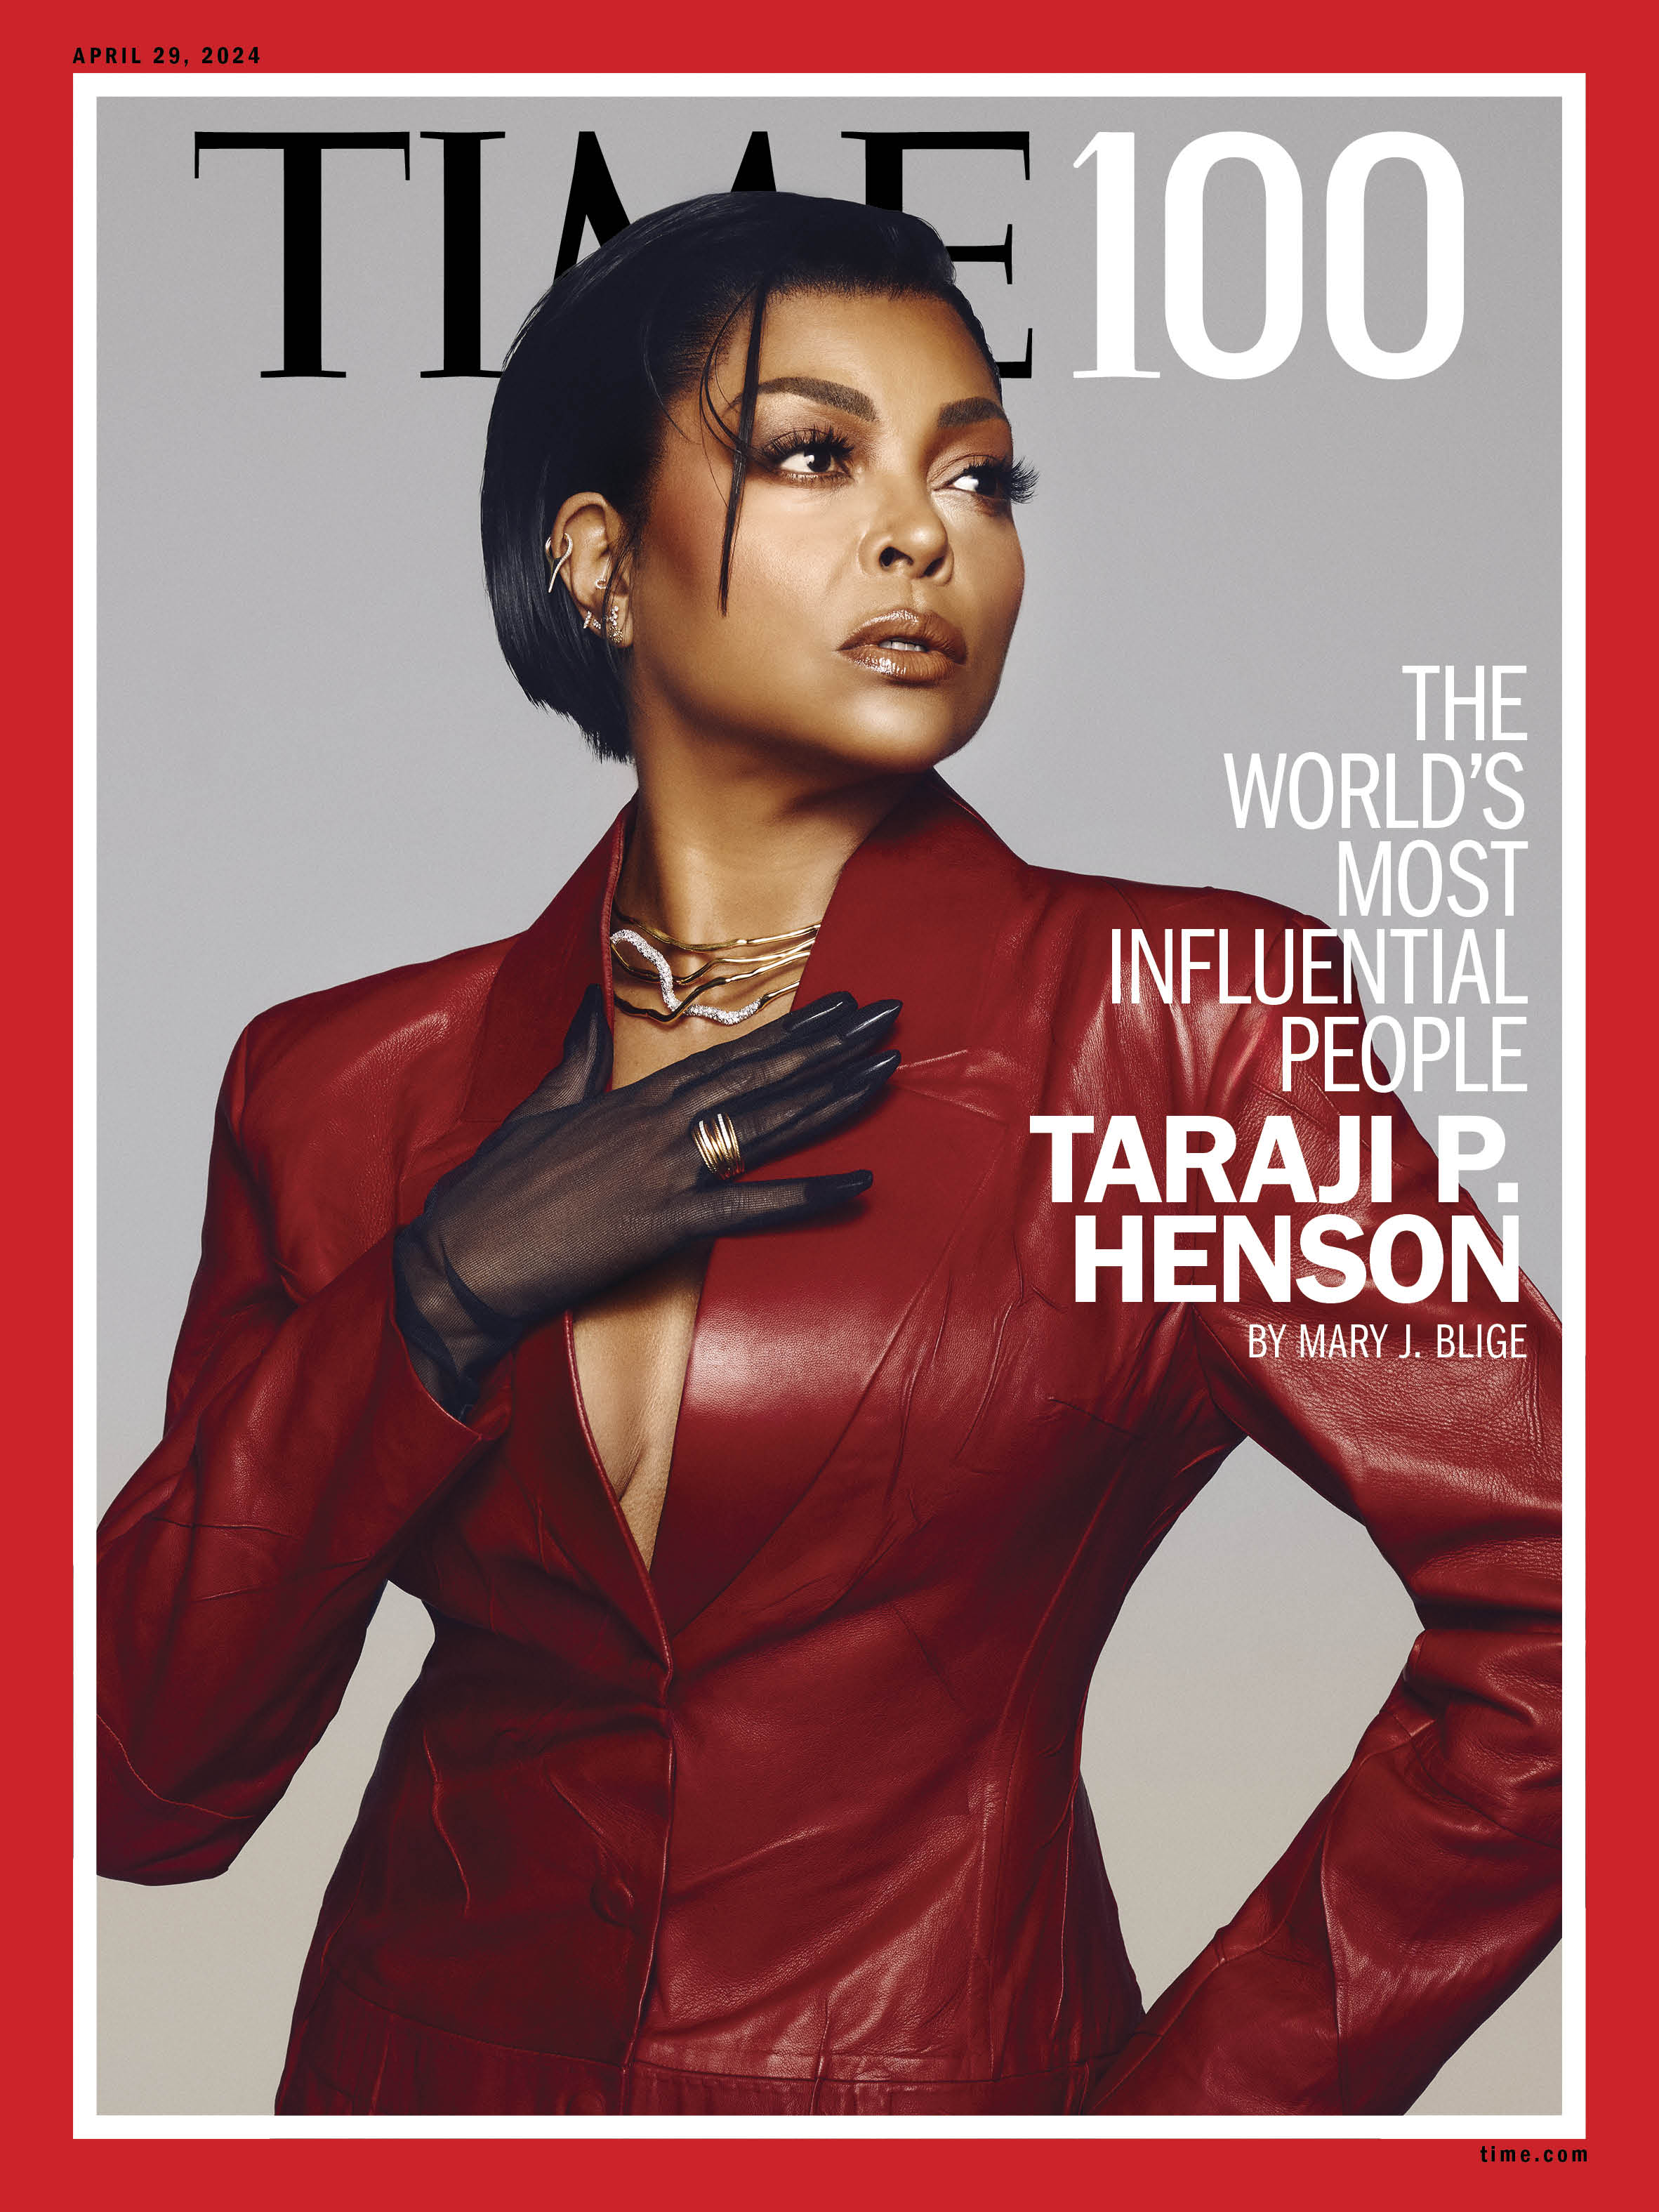 TIME 100 Taraji P. Henson Cover